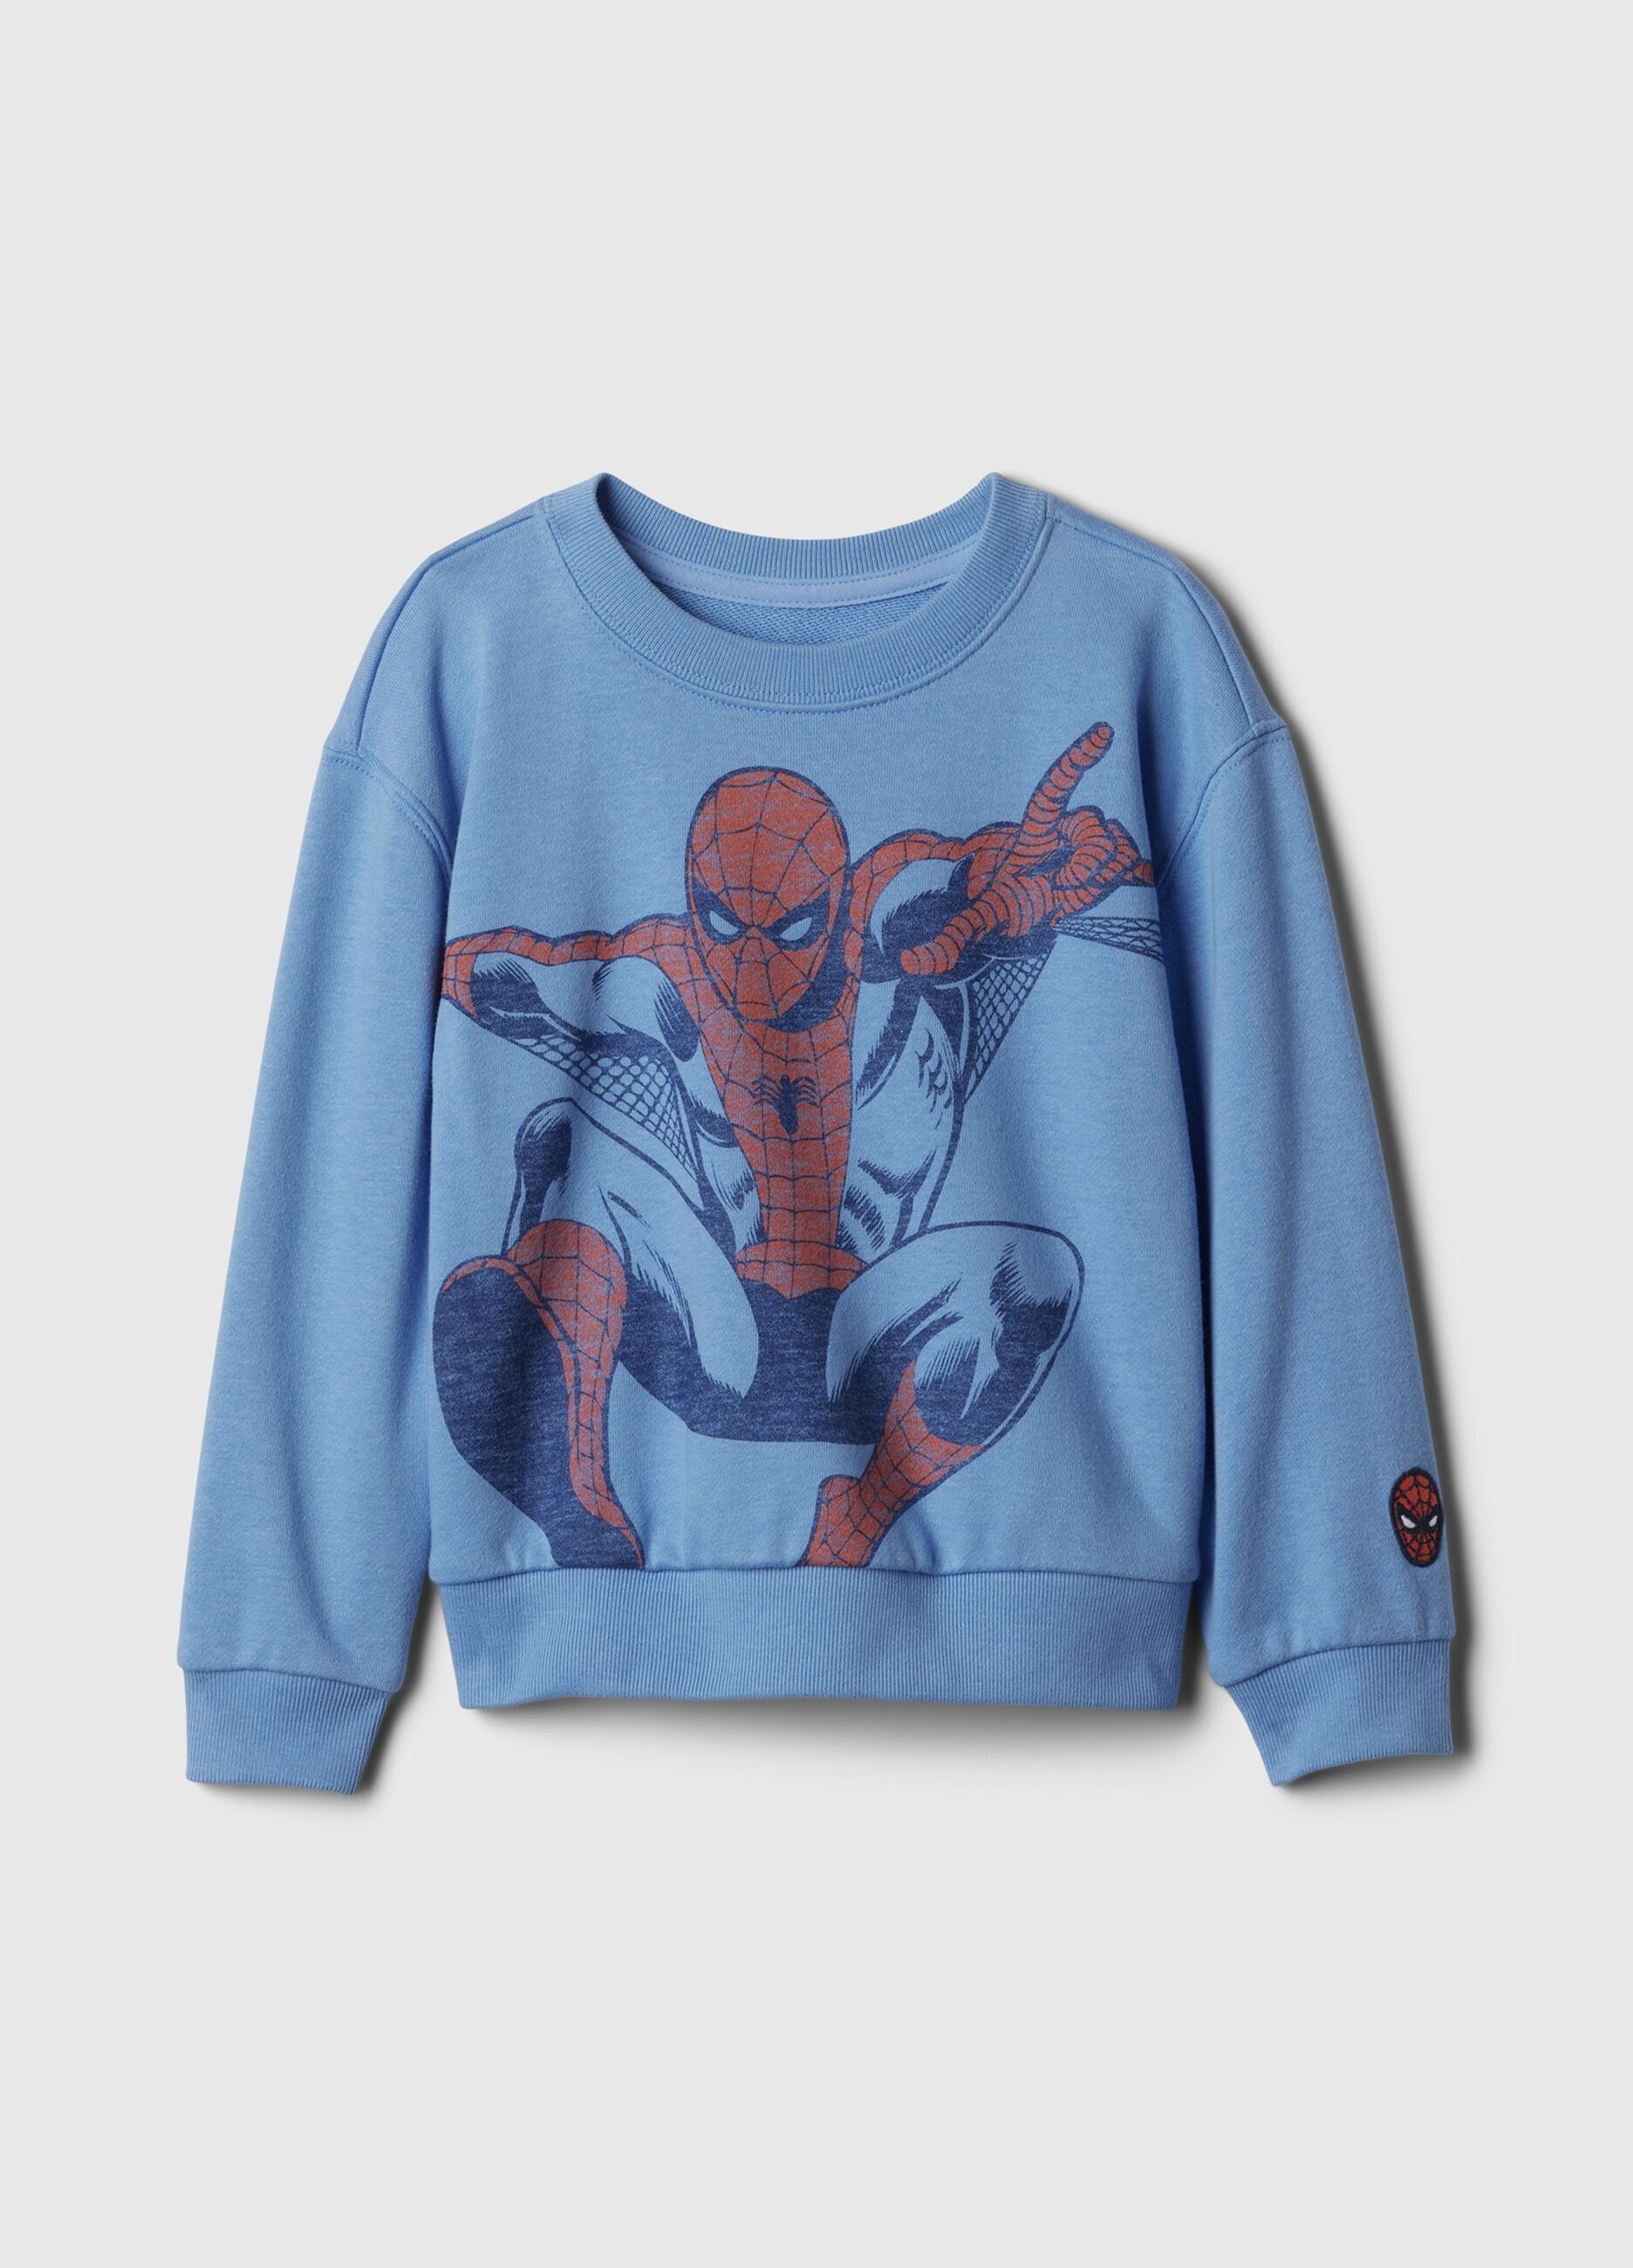 Sweatshirt with round neck and Marvel print